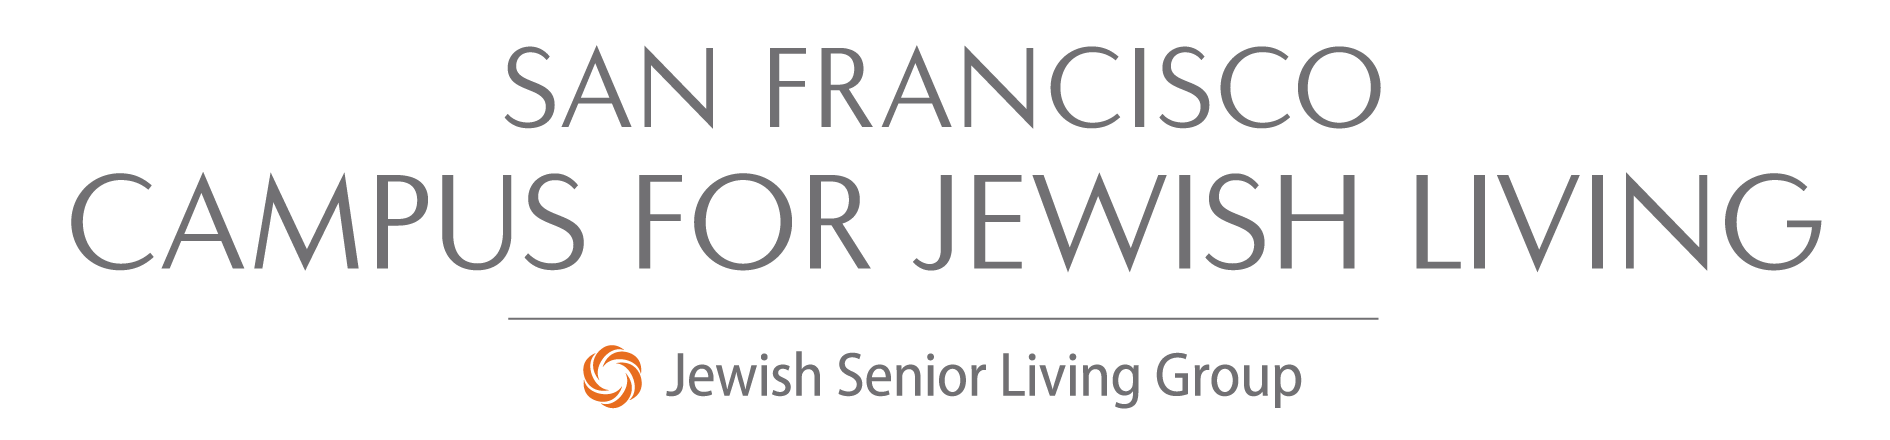 San Francisco Campus for Jewish Living logo